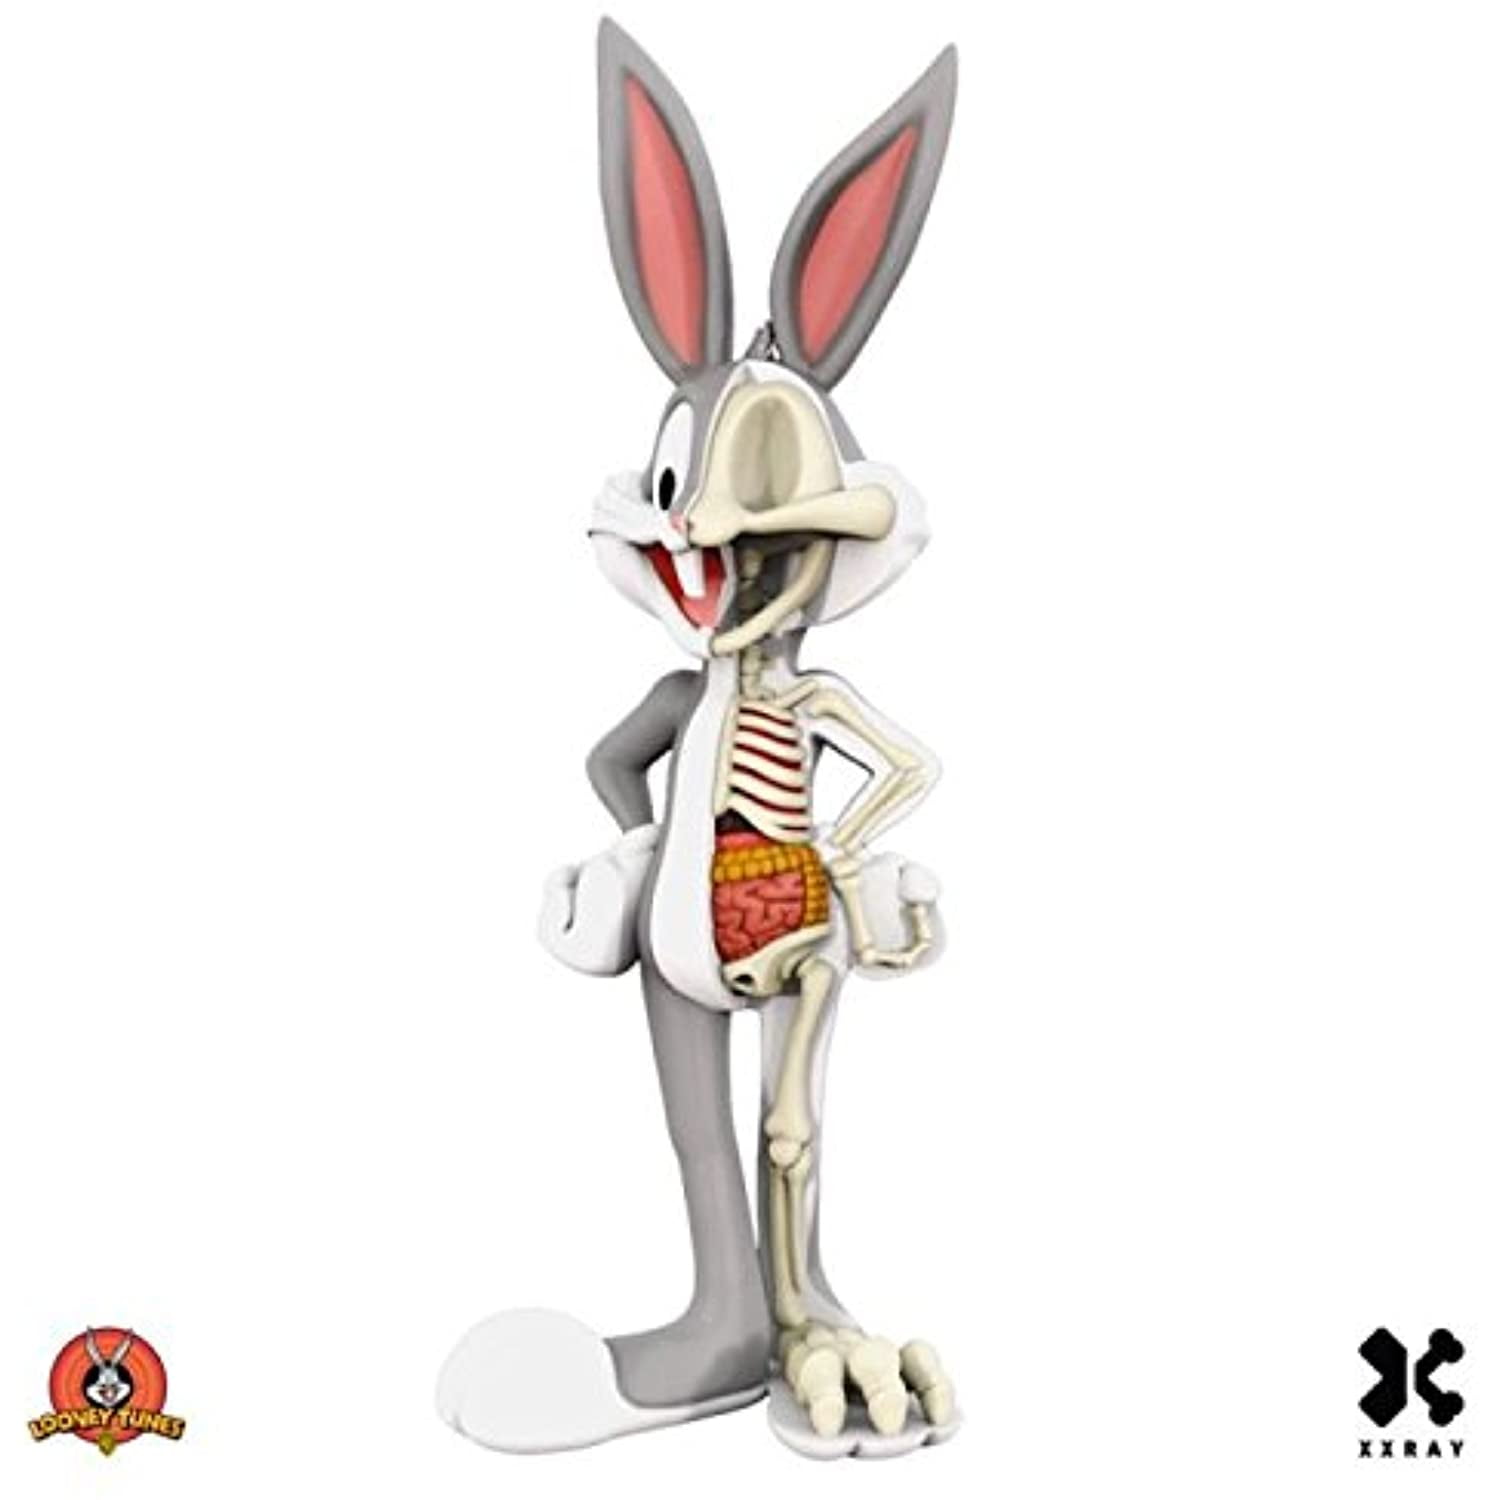 Mighty Jaxx XXRAY Looney Tunes DAFFY DUCK 4" Dissected Vinyl Art Figure 